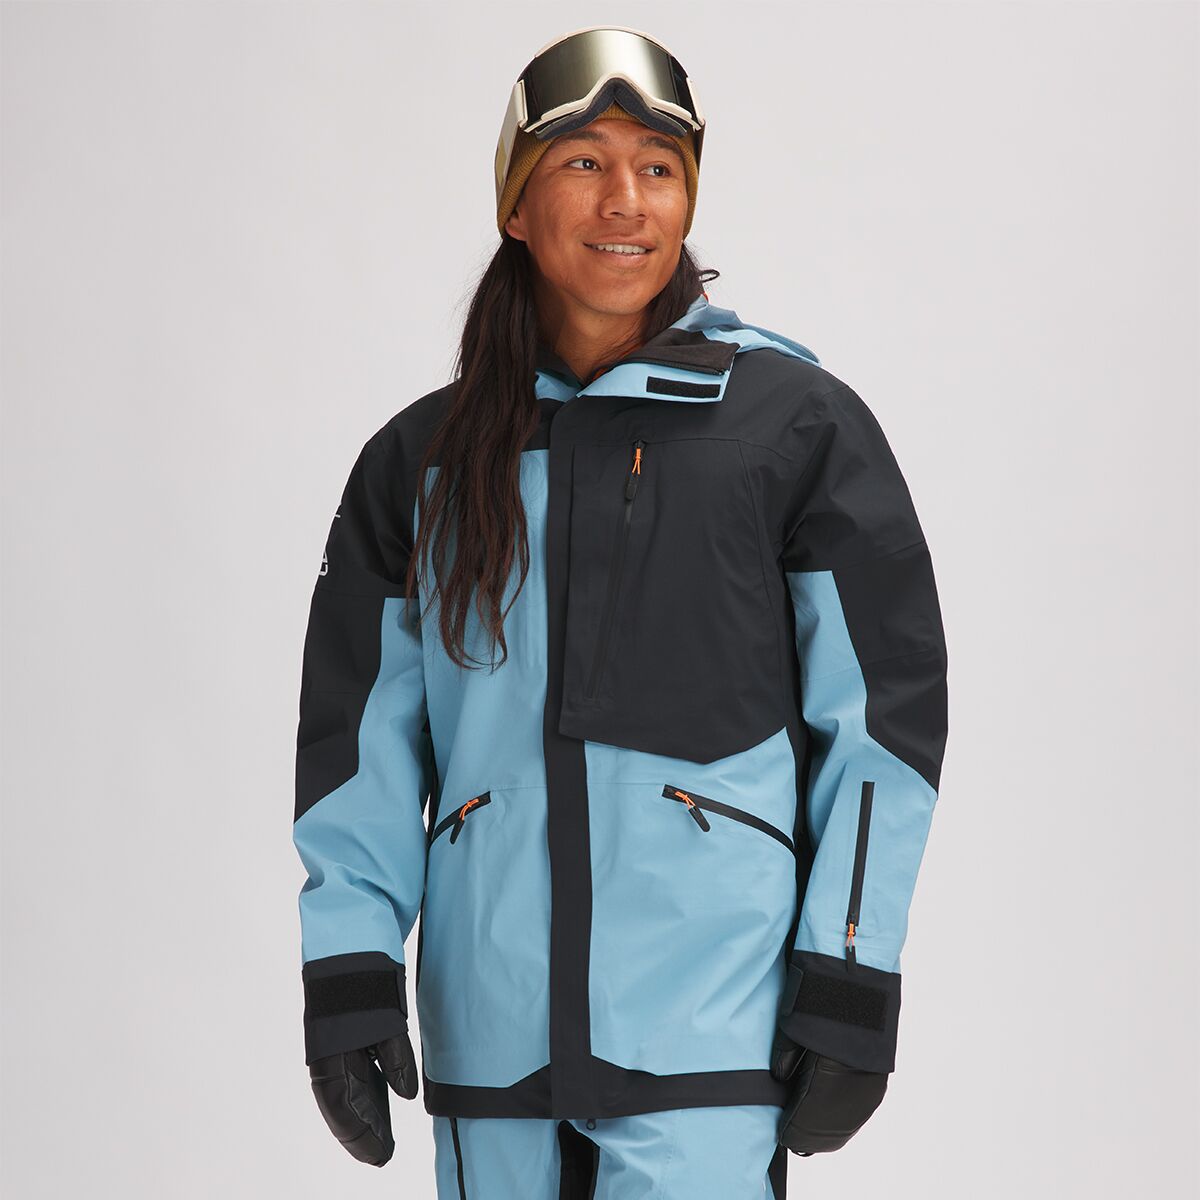 buy snowboard jackets online